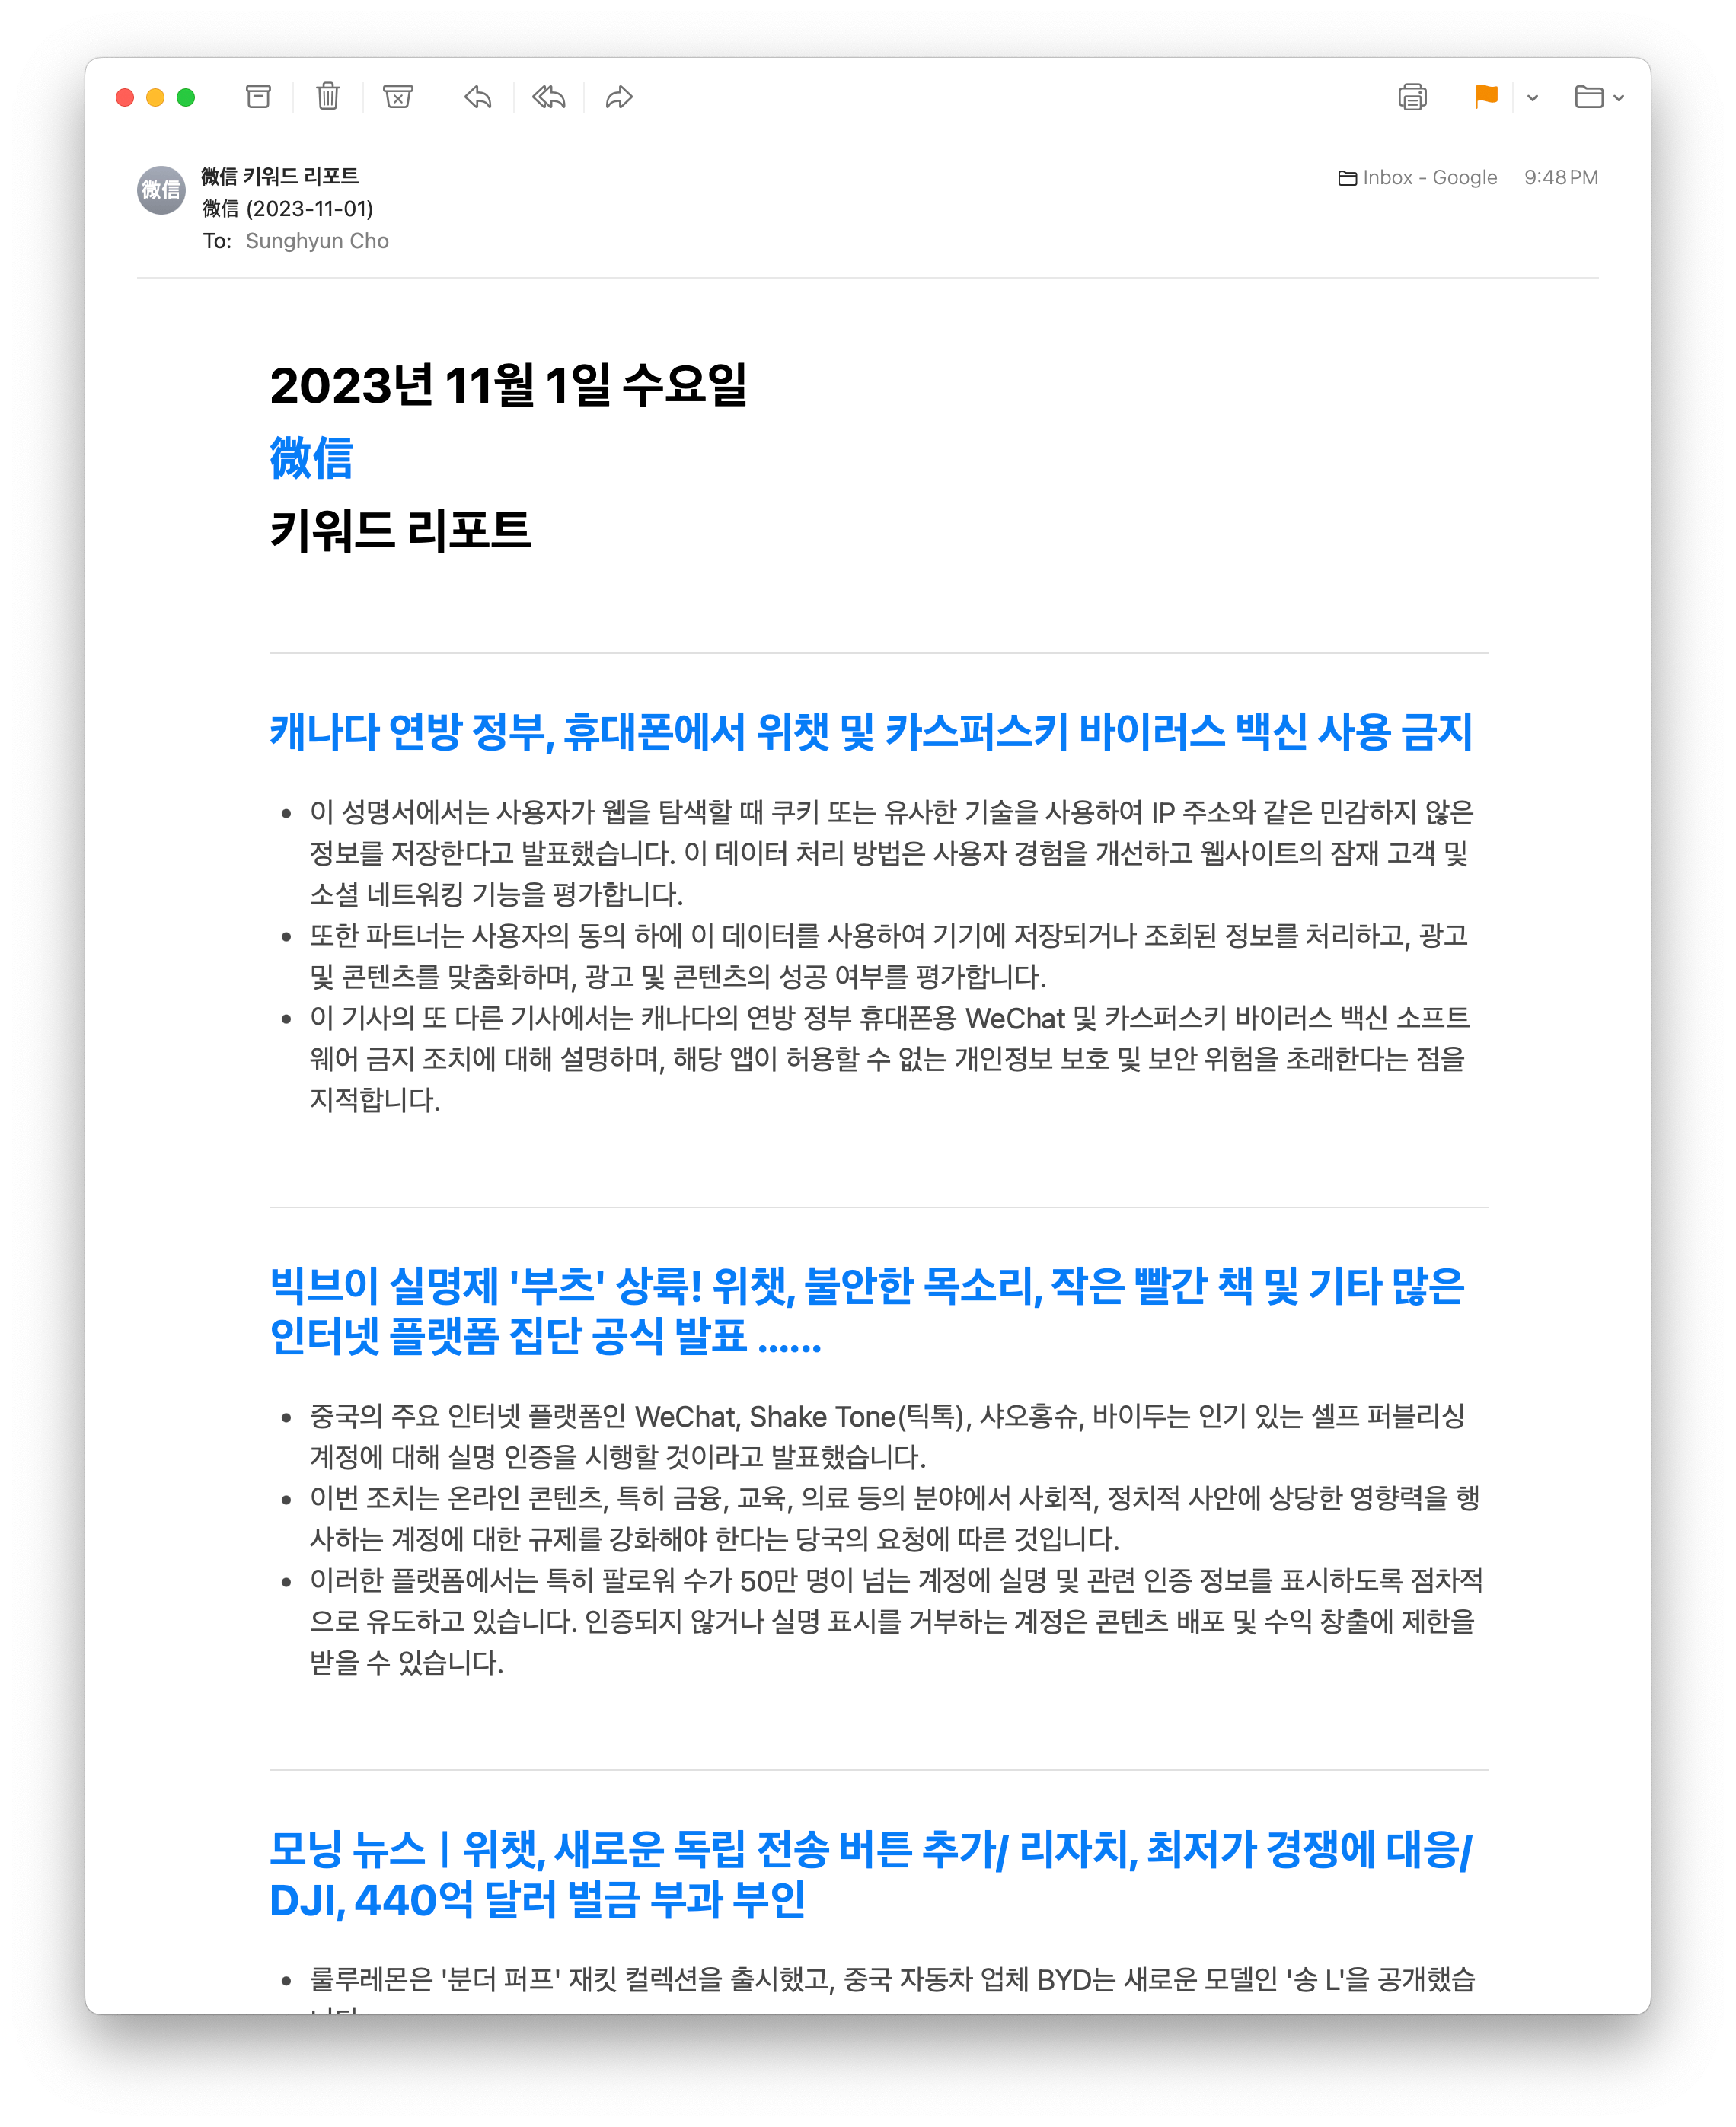 Subscribed to 微信 (WeChat), language set to Korean